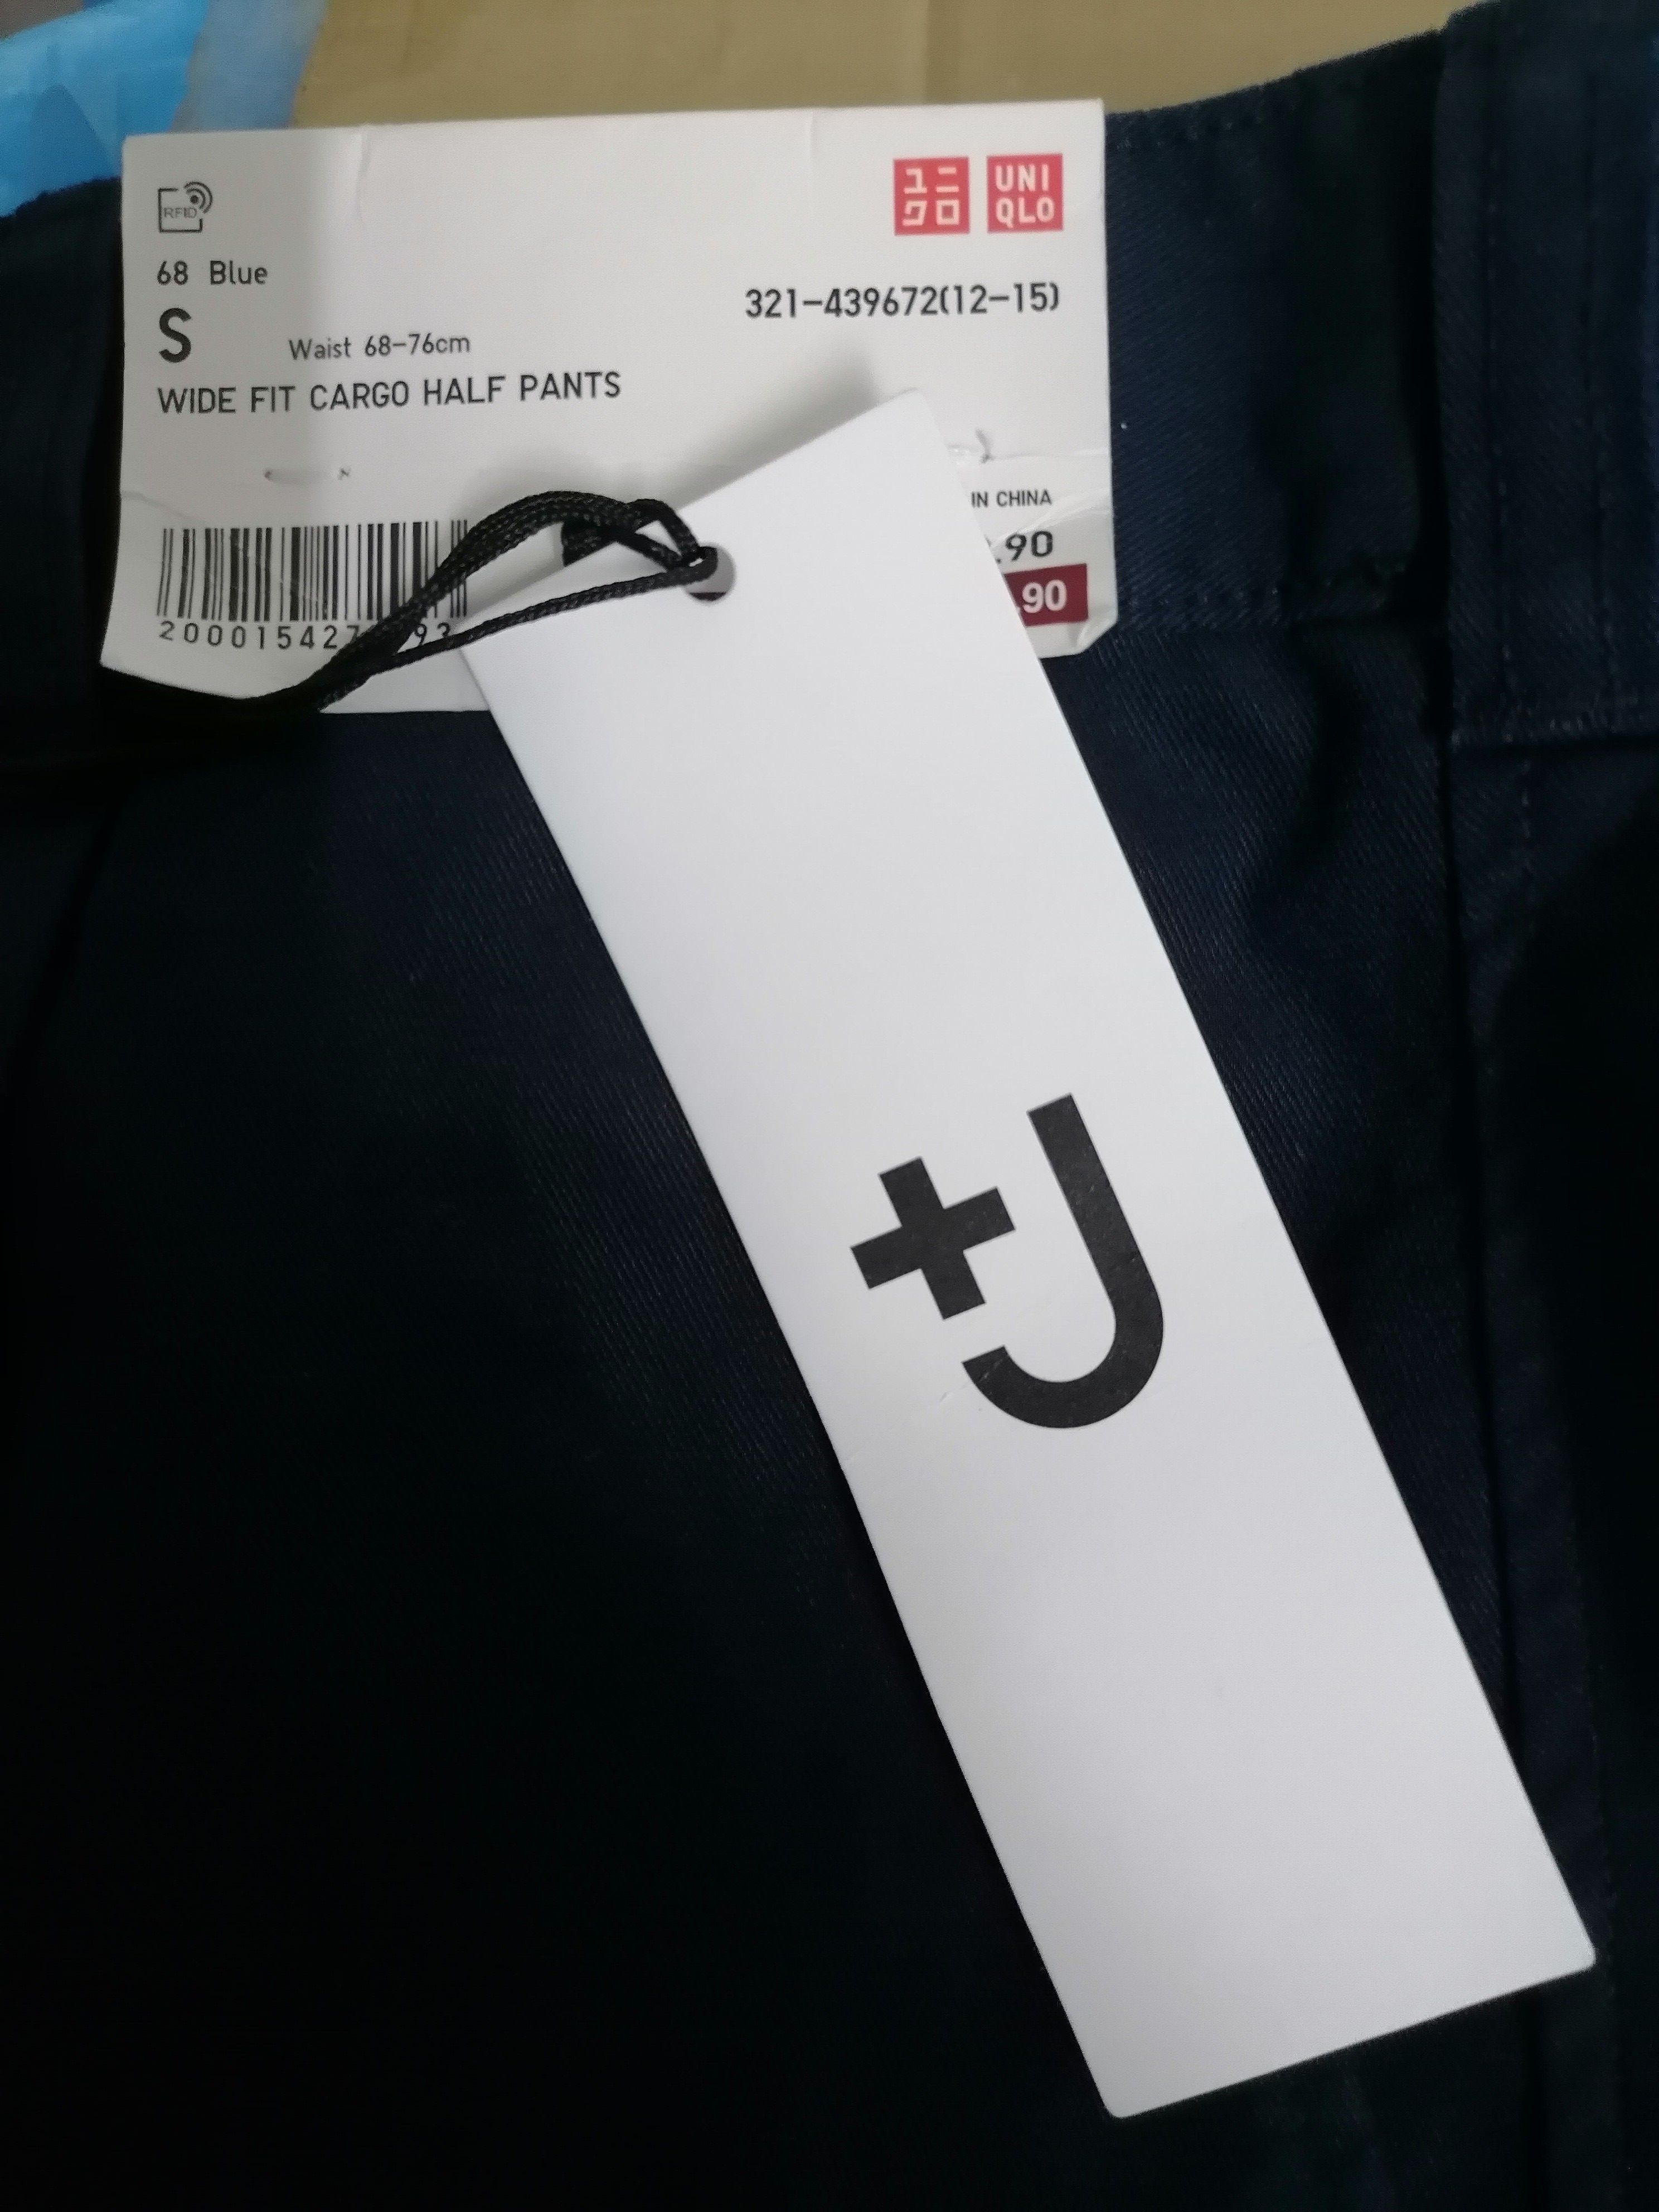 Jil Sander Uniqlo Jil Sander +J Wide Fit Cargo Half Pants | Grailed